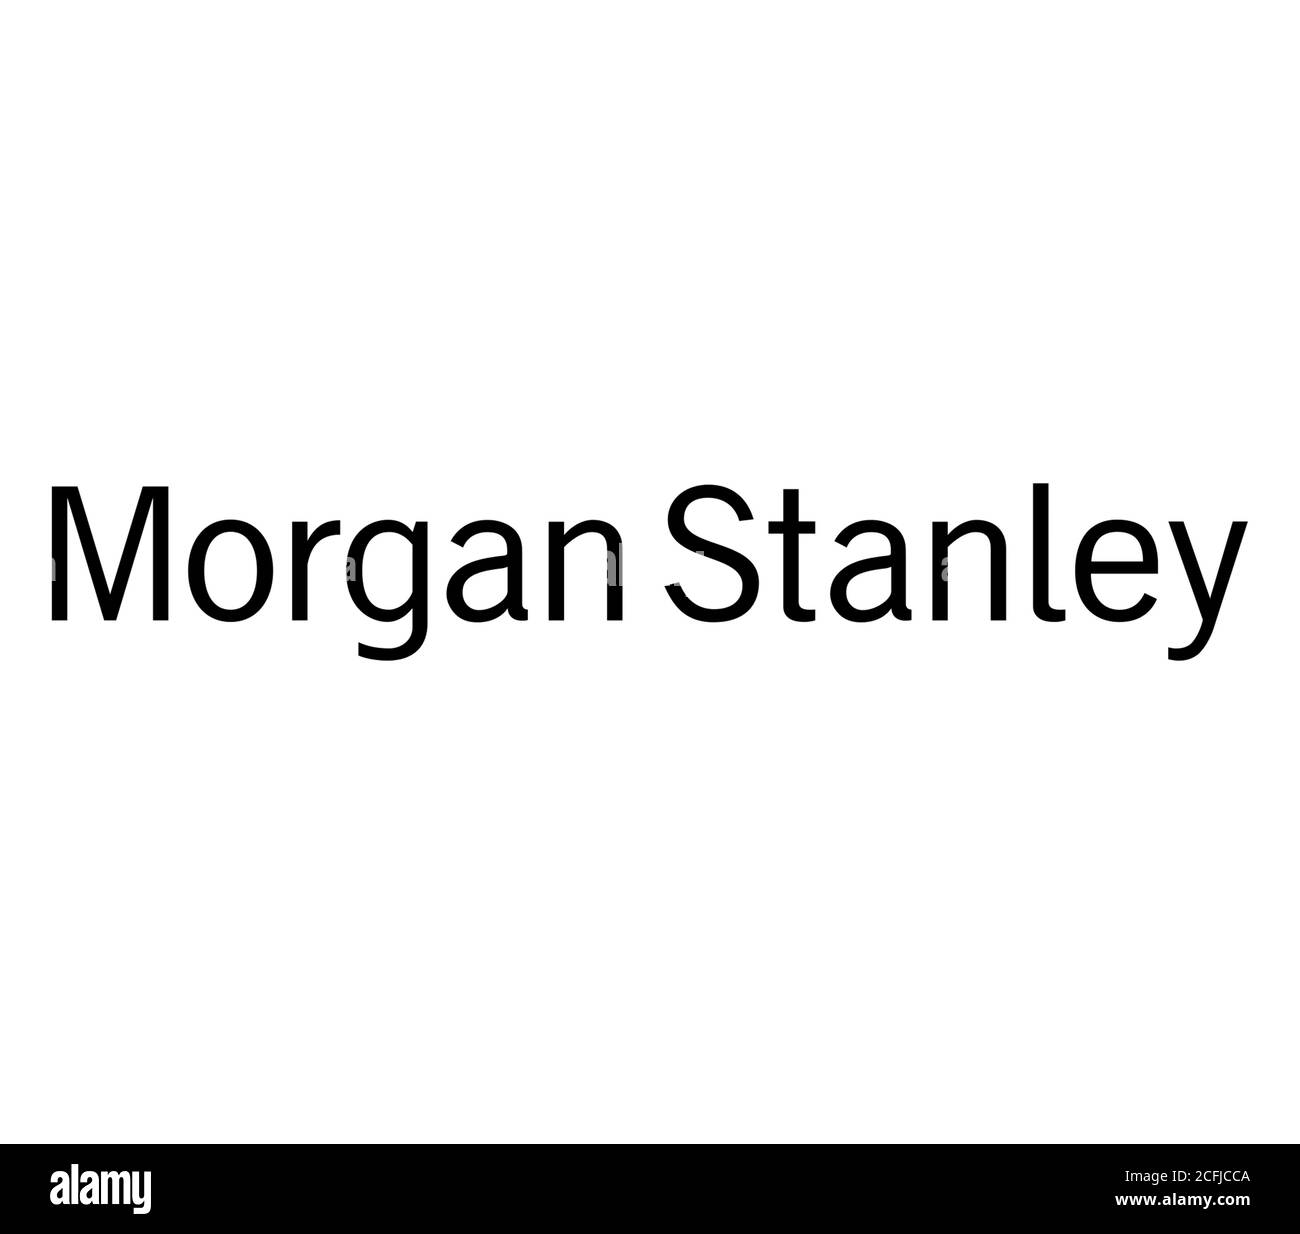 Morgan Stanley Stock Photo